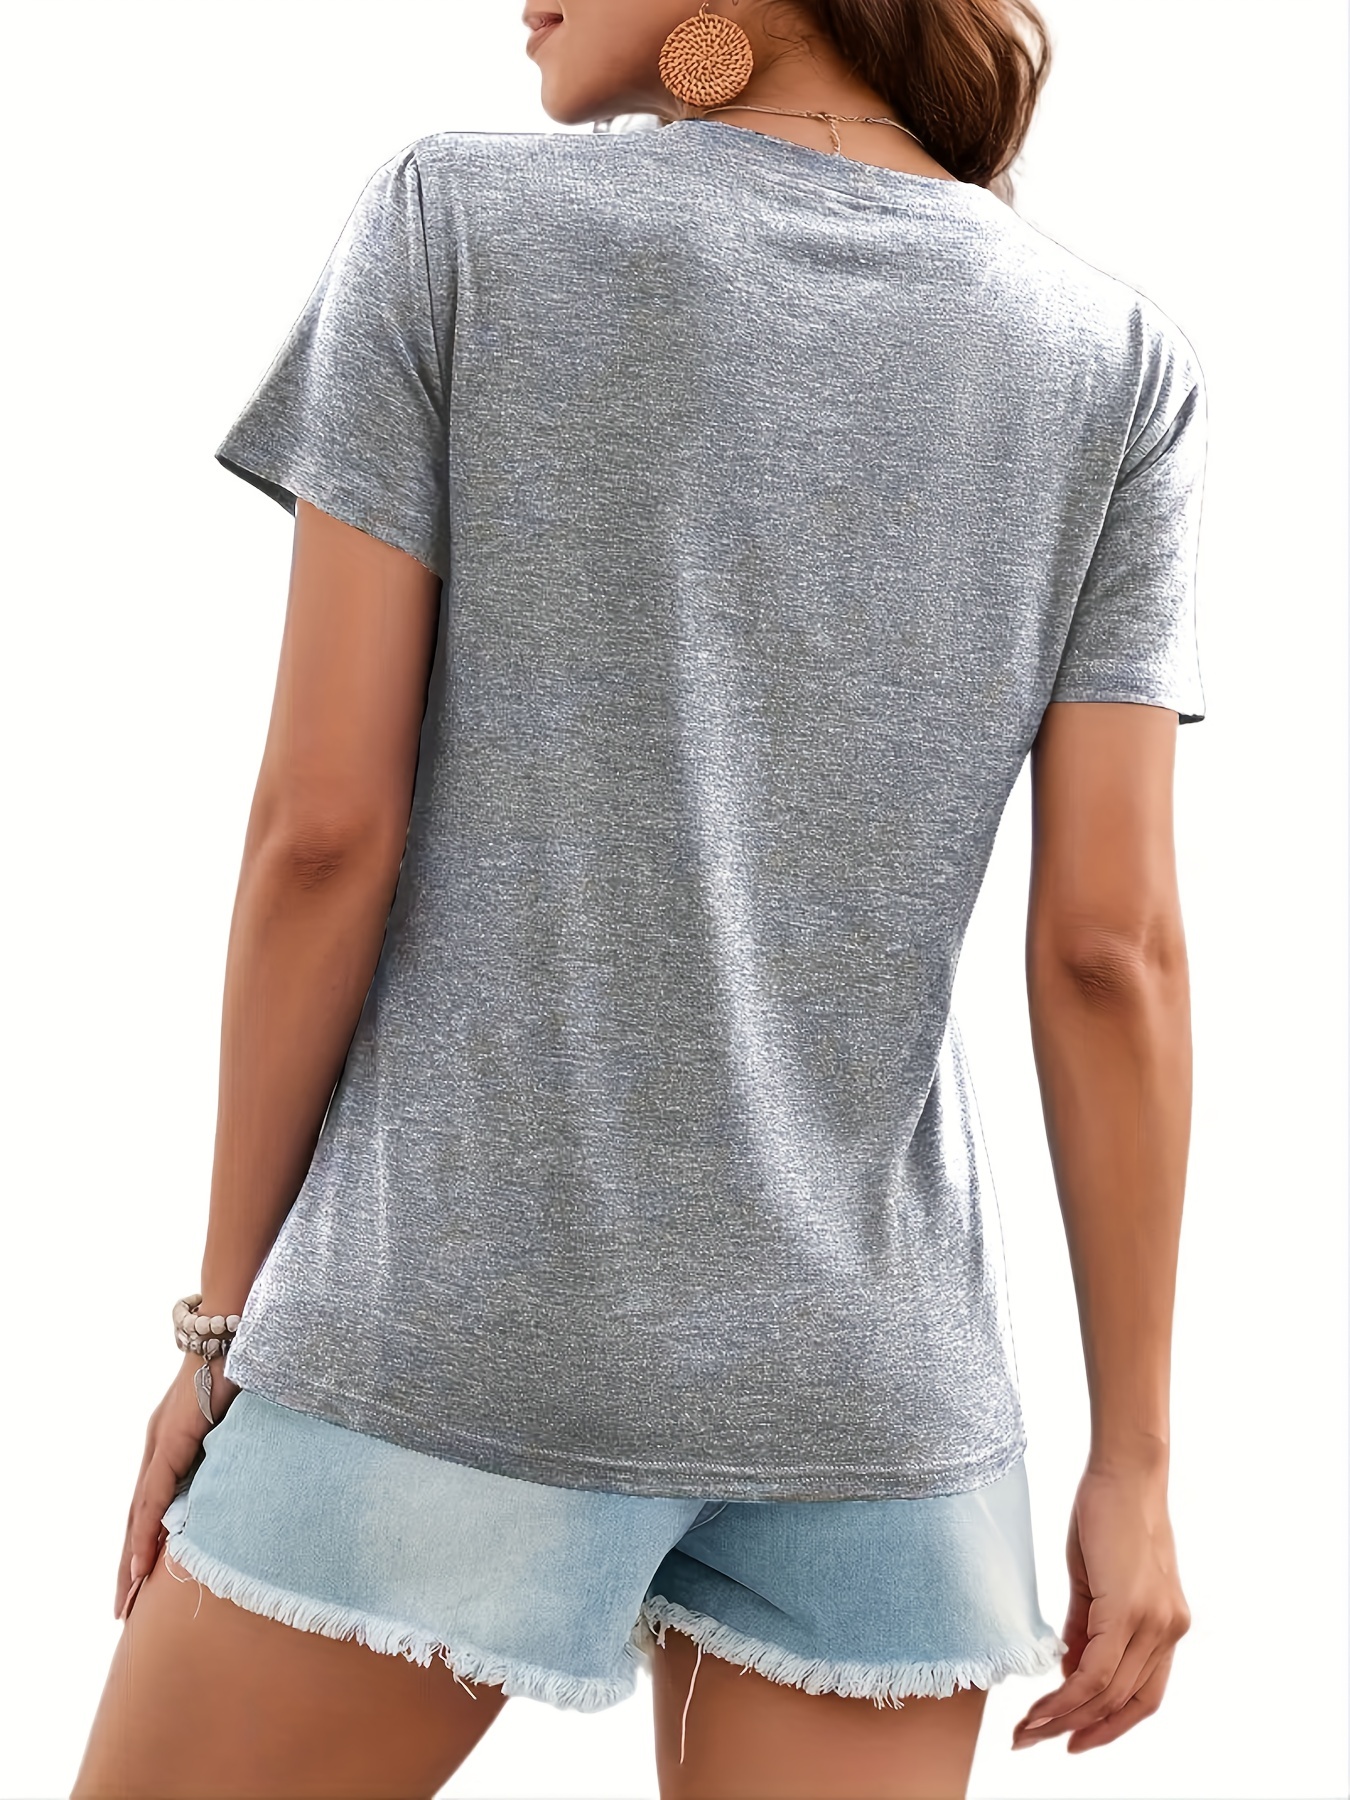 Round Printed Ladies T Shirt With Shorts, Half Sleeves at Rs 160